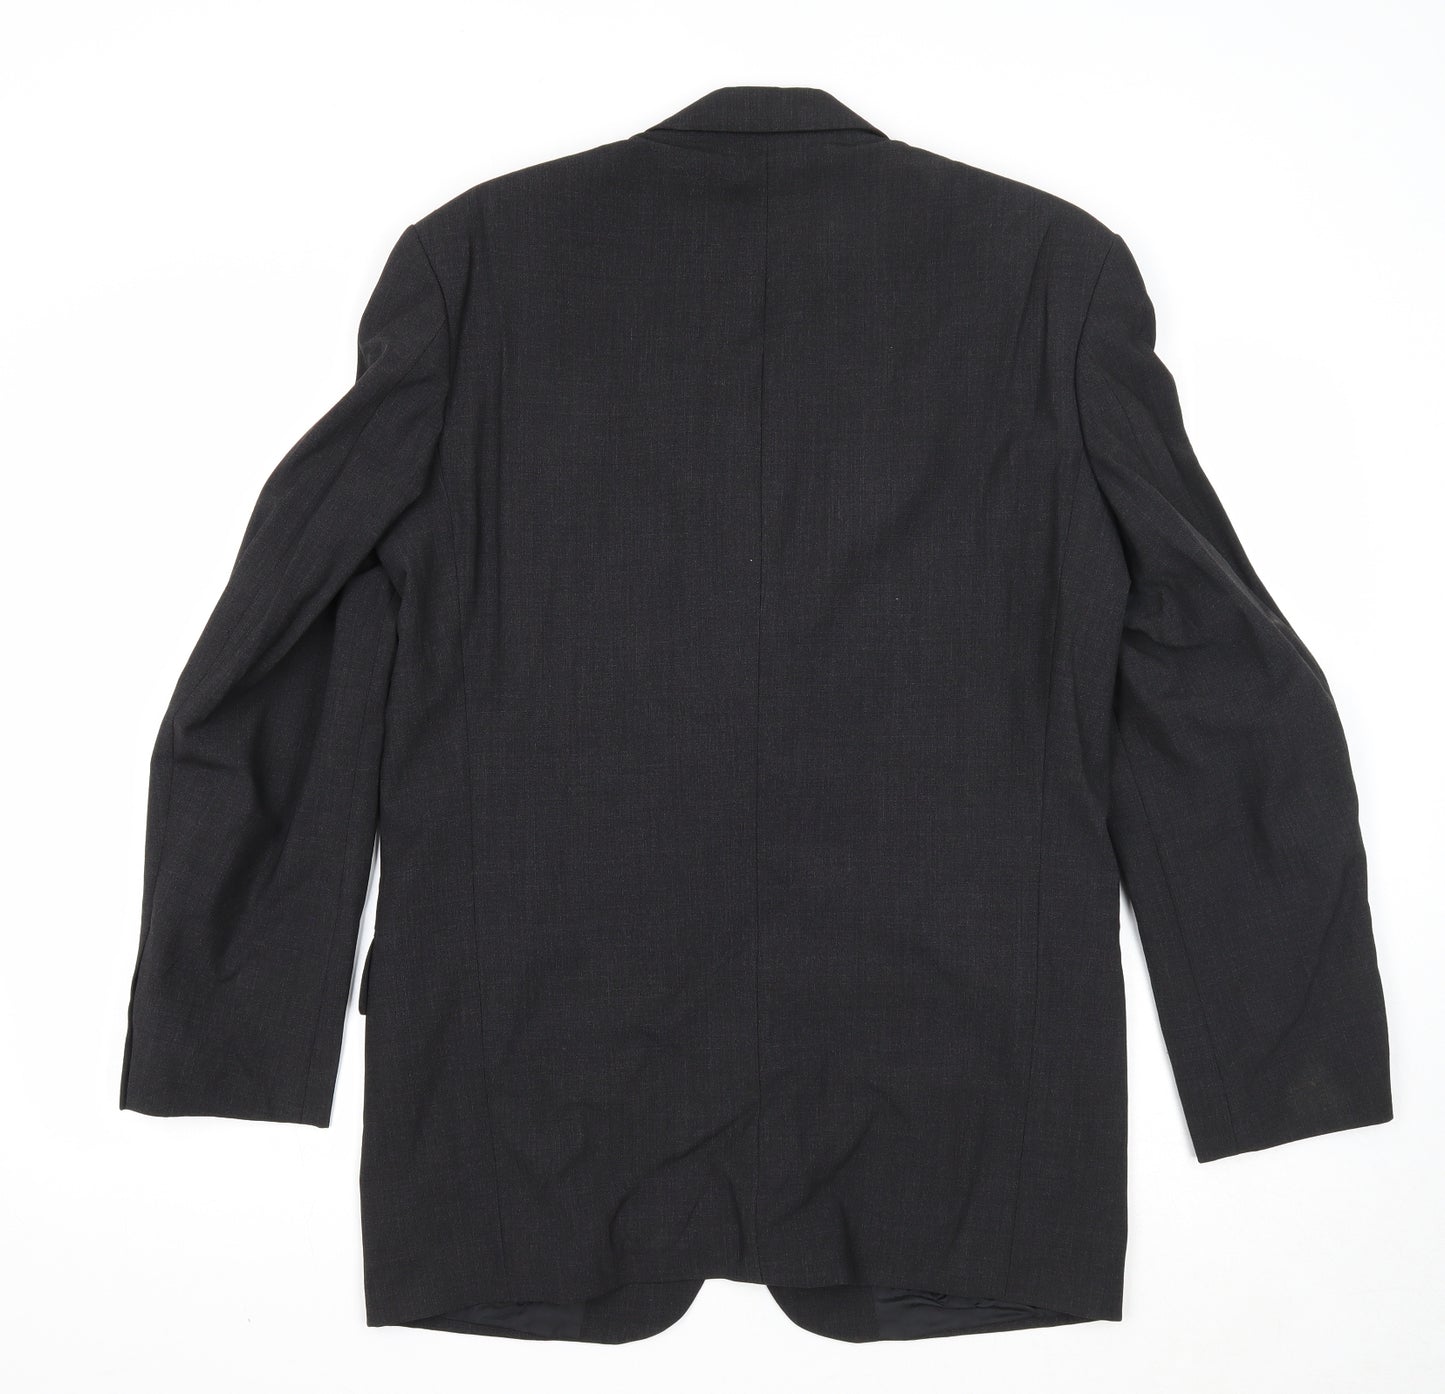 NEXT Mens Black Wool Jacket Suit Jacket Size 36 Regular